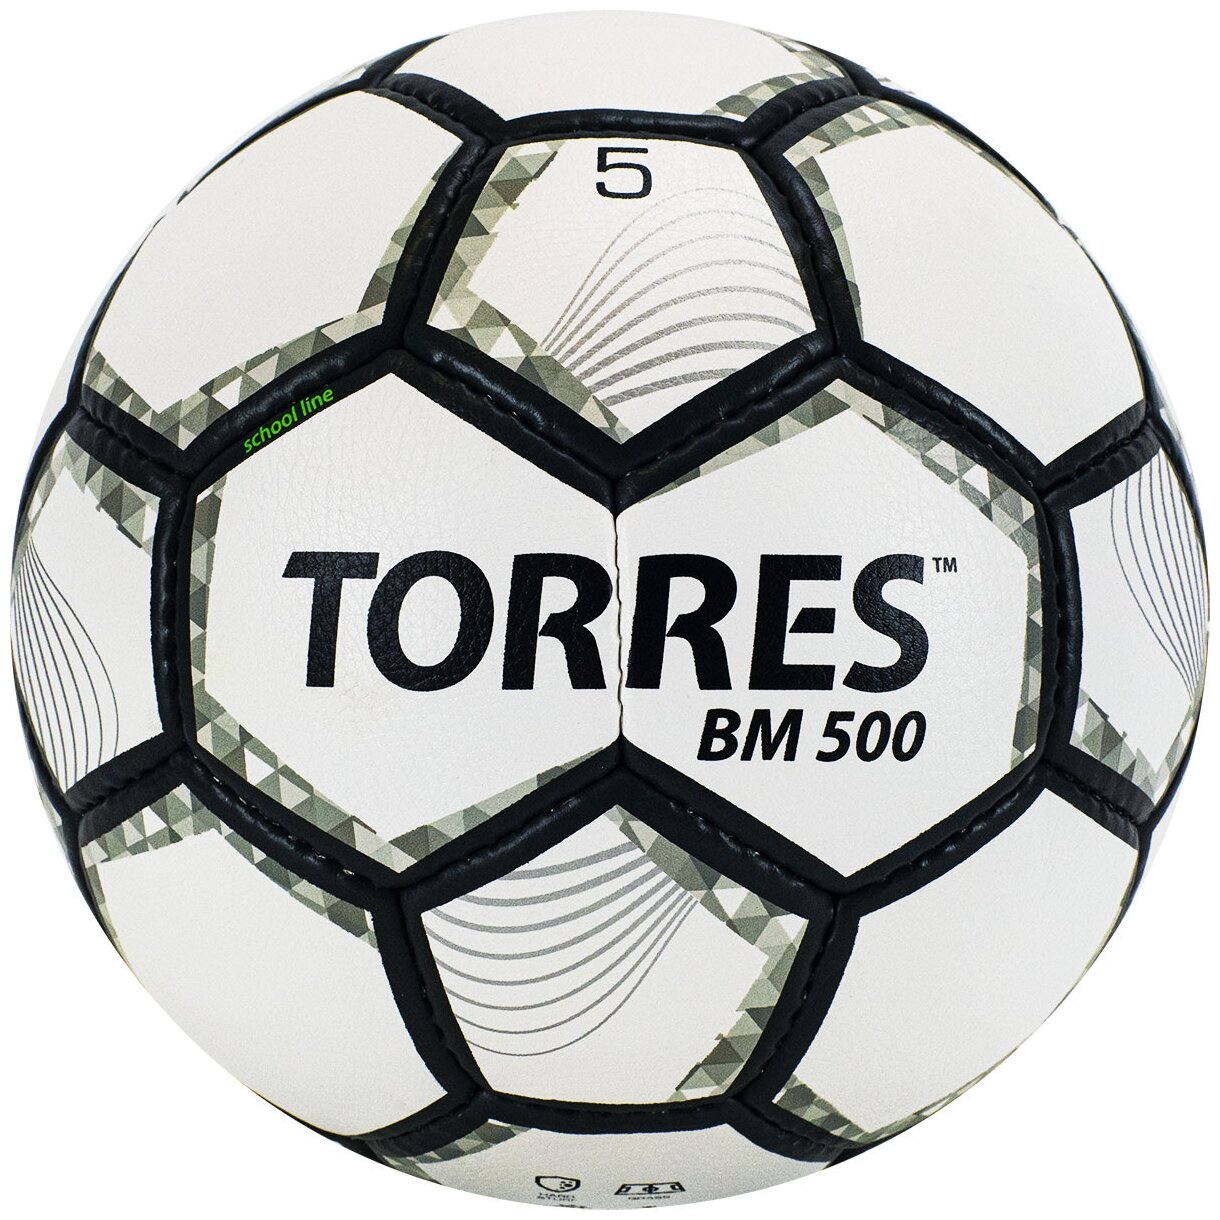   Torres BM 1000 .5 .F30625